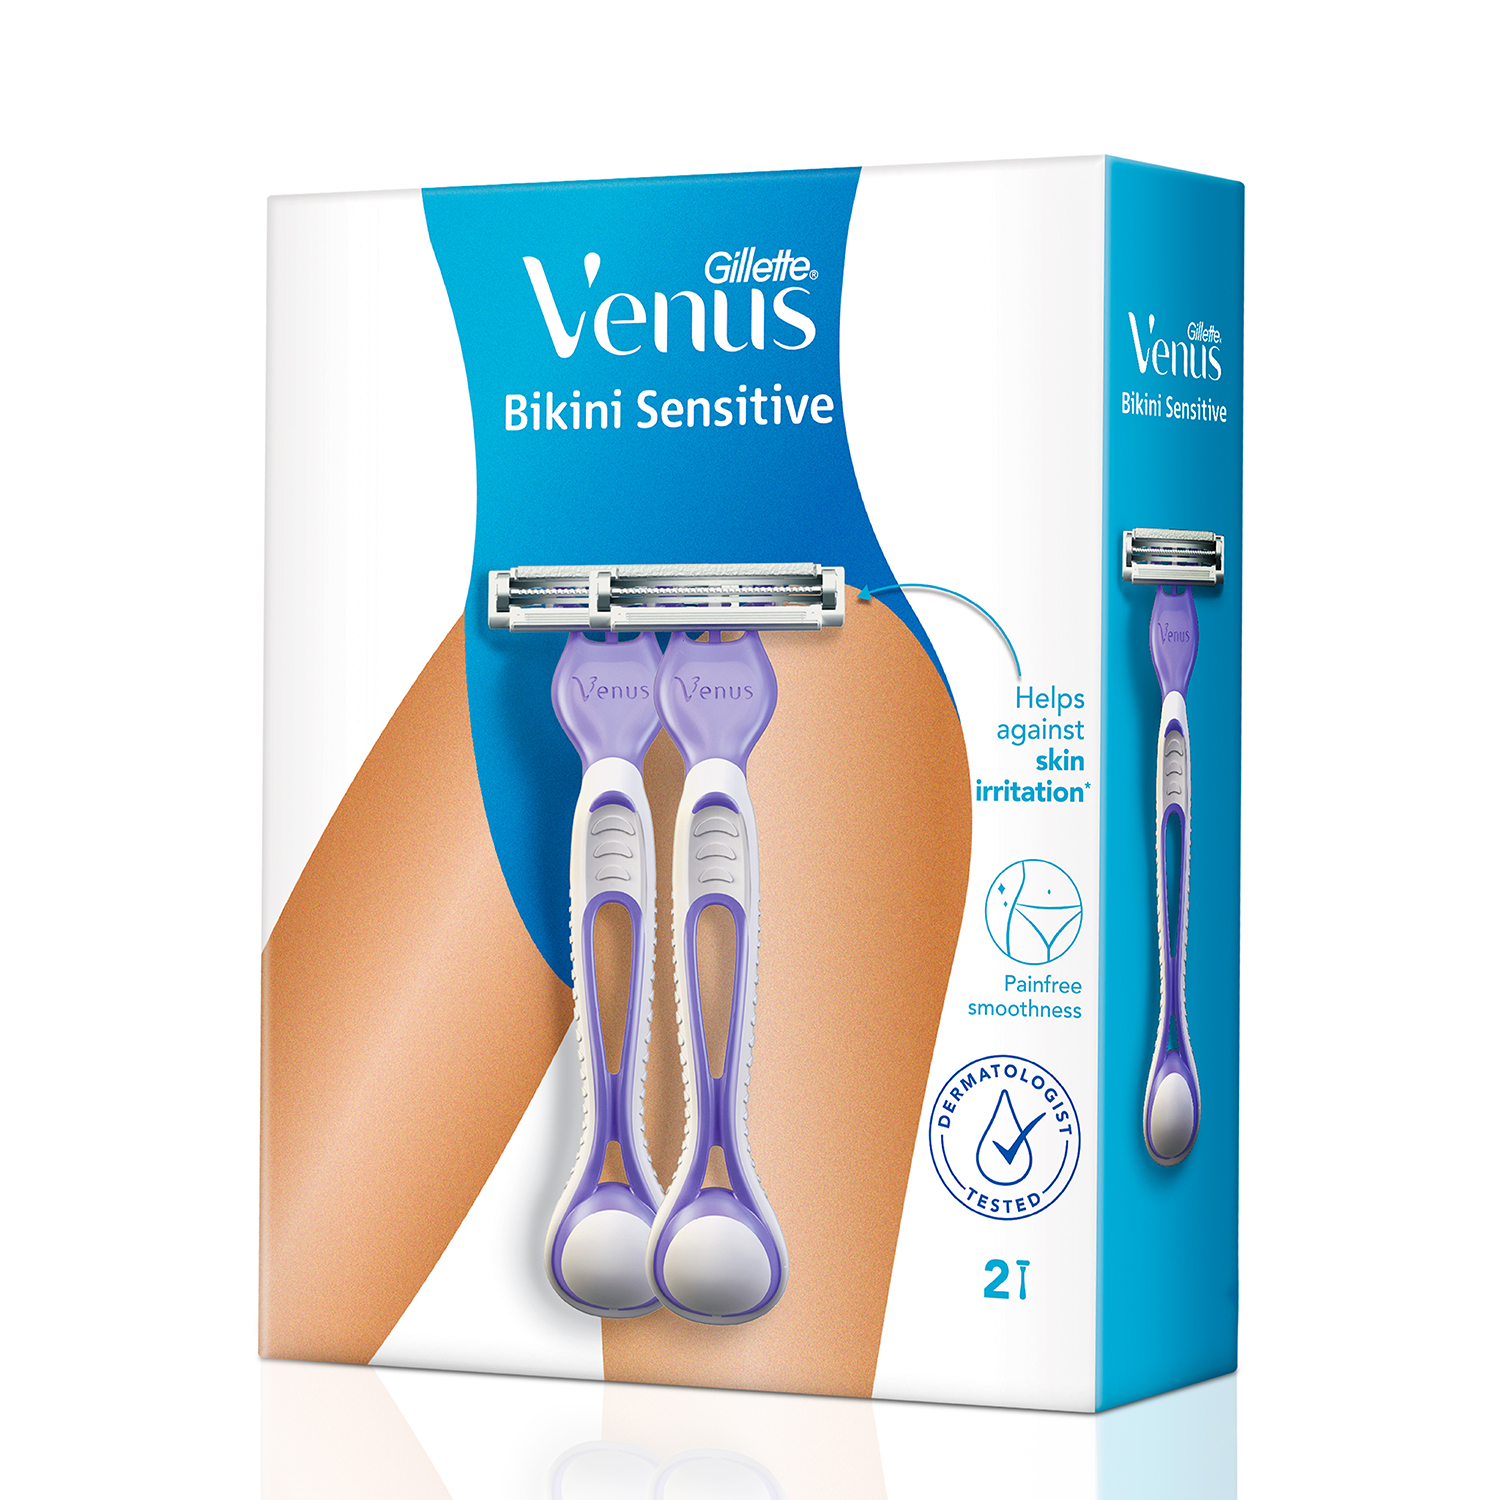 Gillette Venus Bikini sensitive hair removal, 2 razors| Intimate care| Derm tested| No irritation